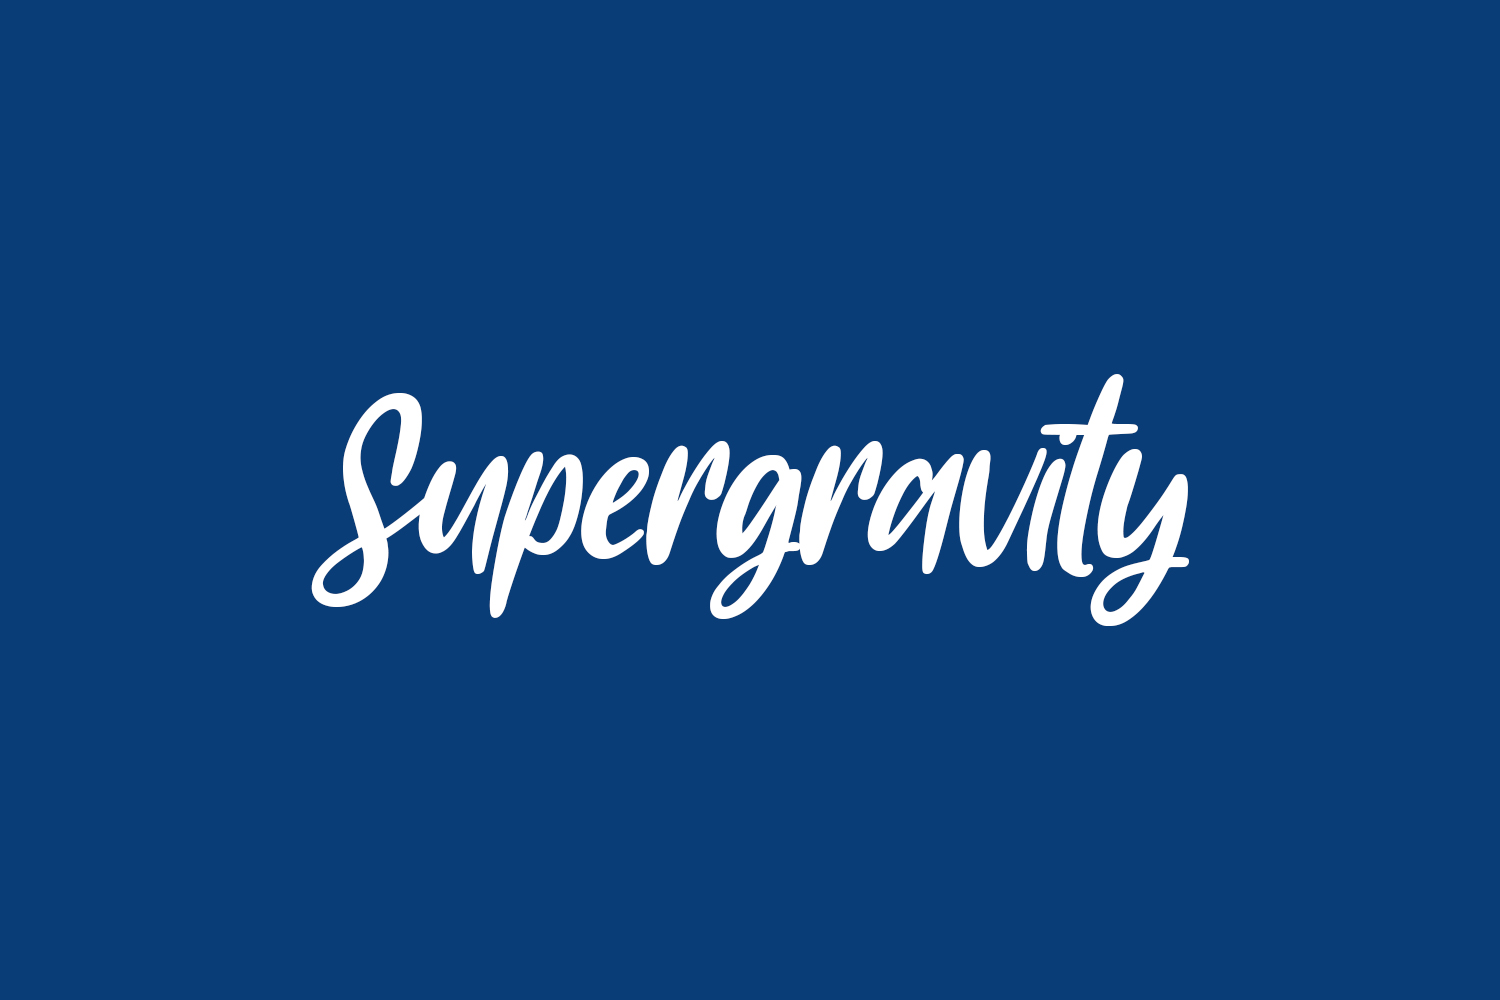 Supergravity Free Font